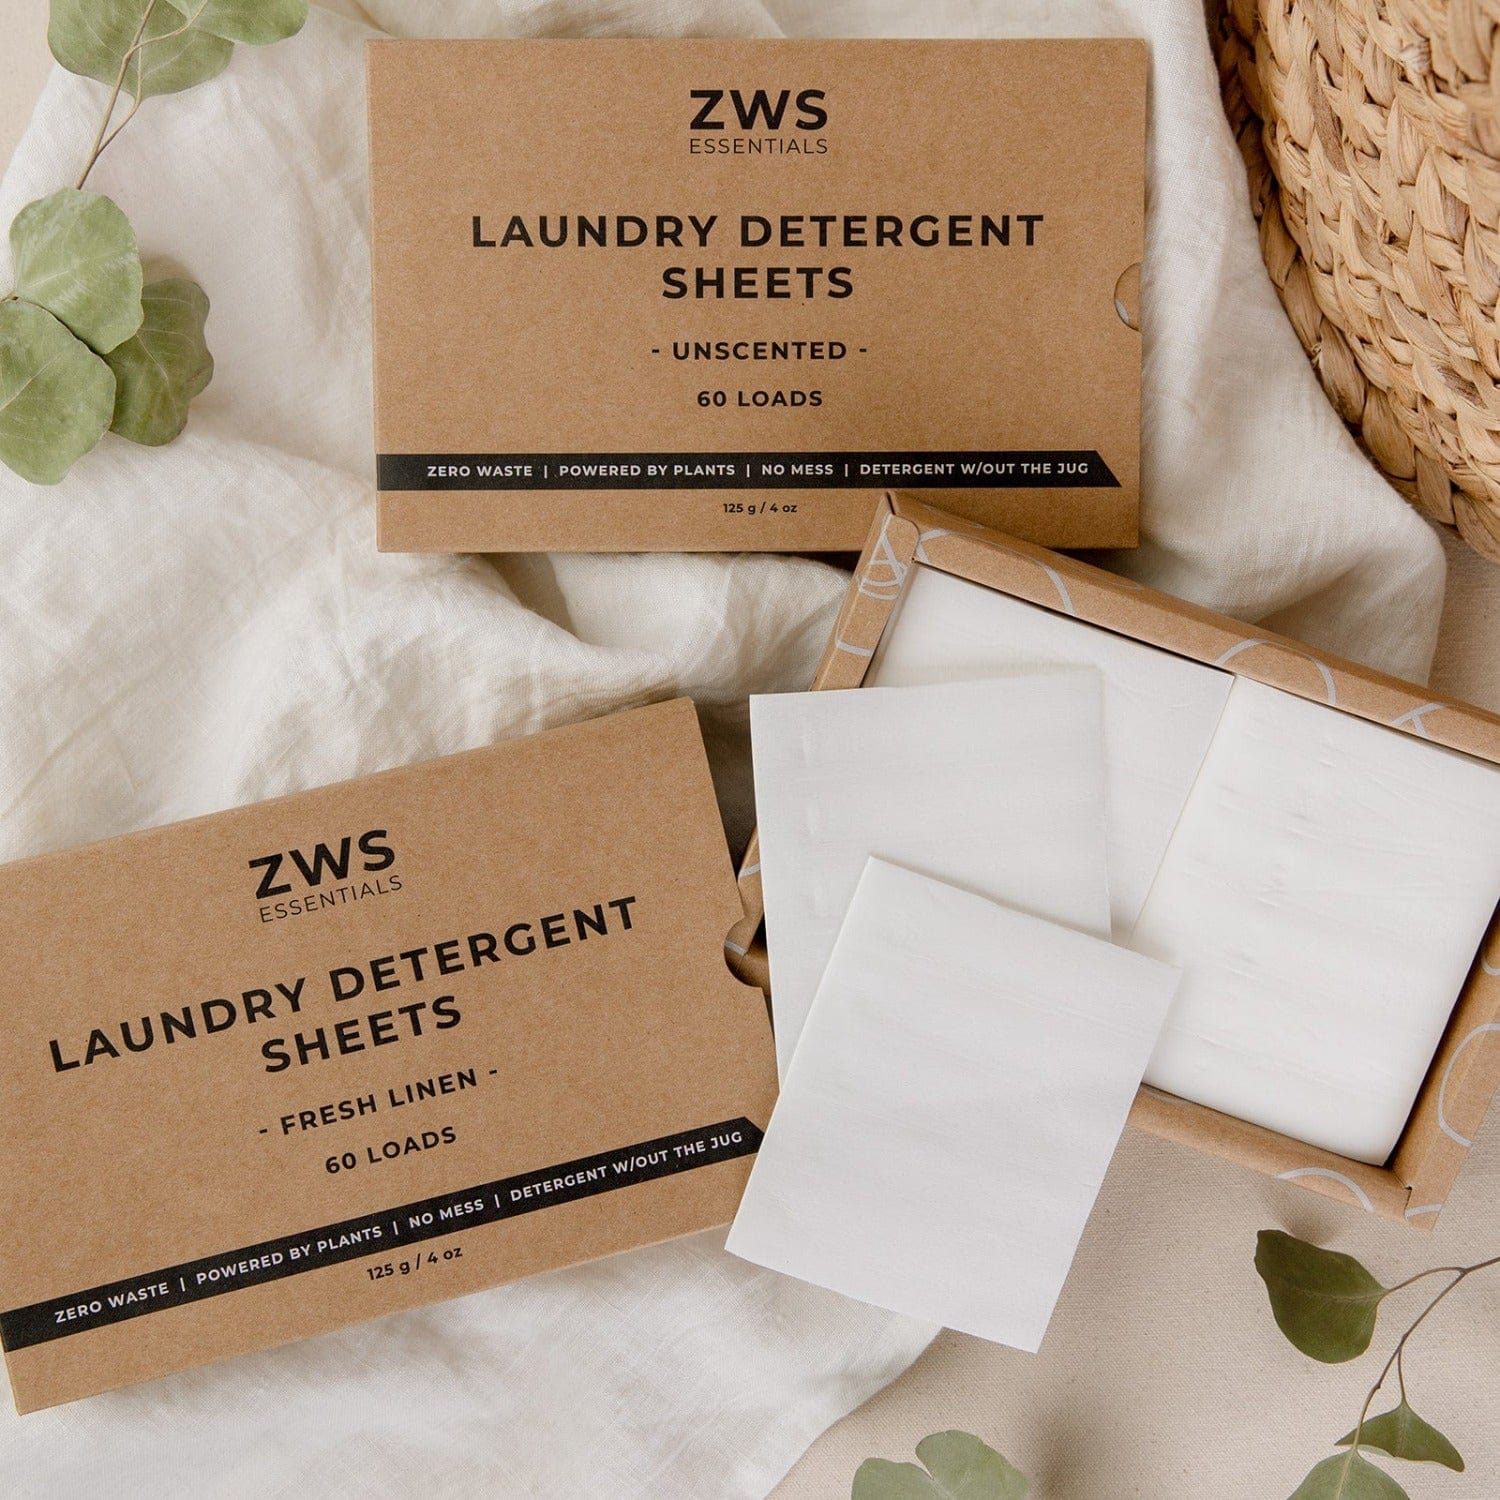 Laundry Detergent Sheets - Zero Waste Laundry Sheets - 60 Loads